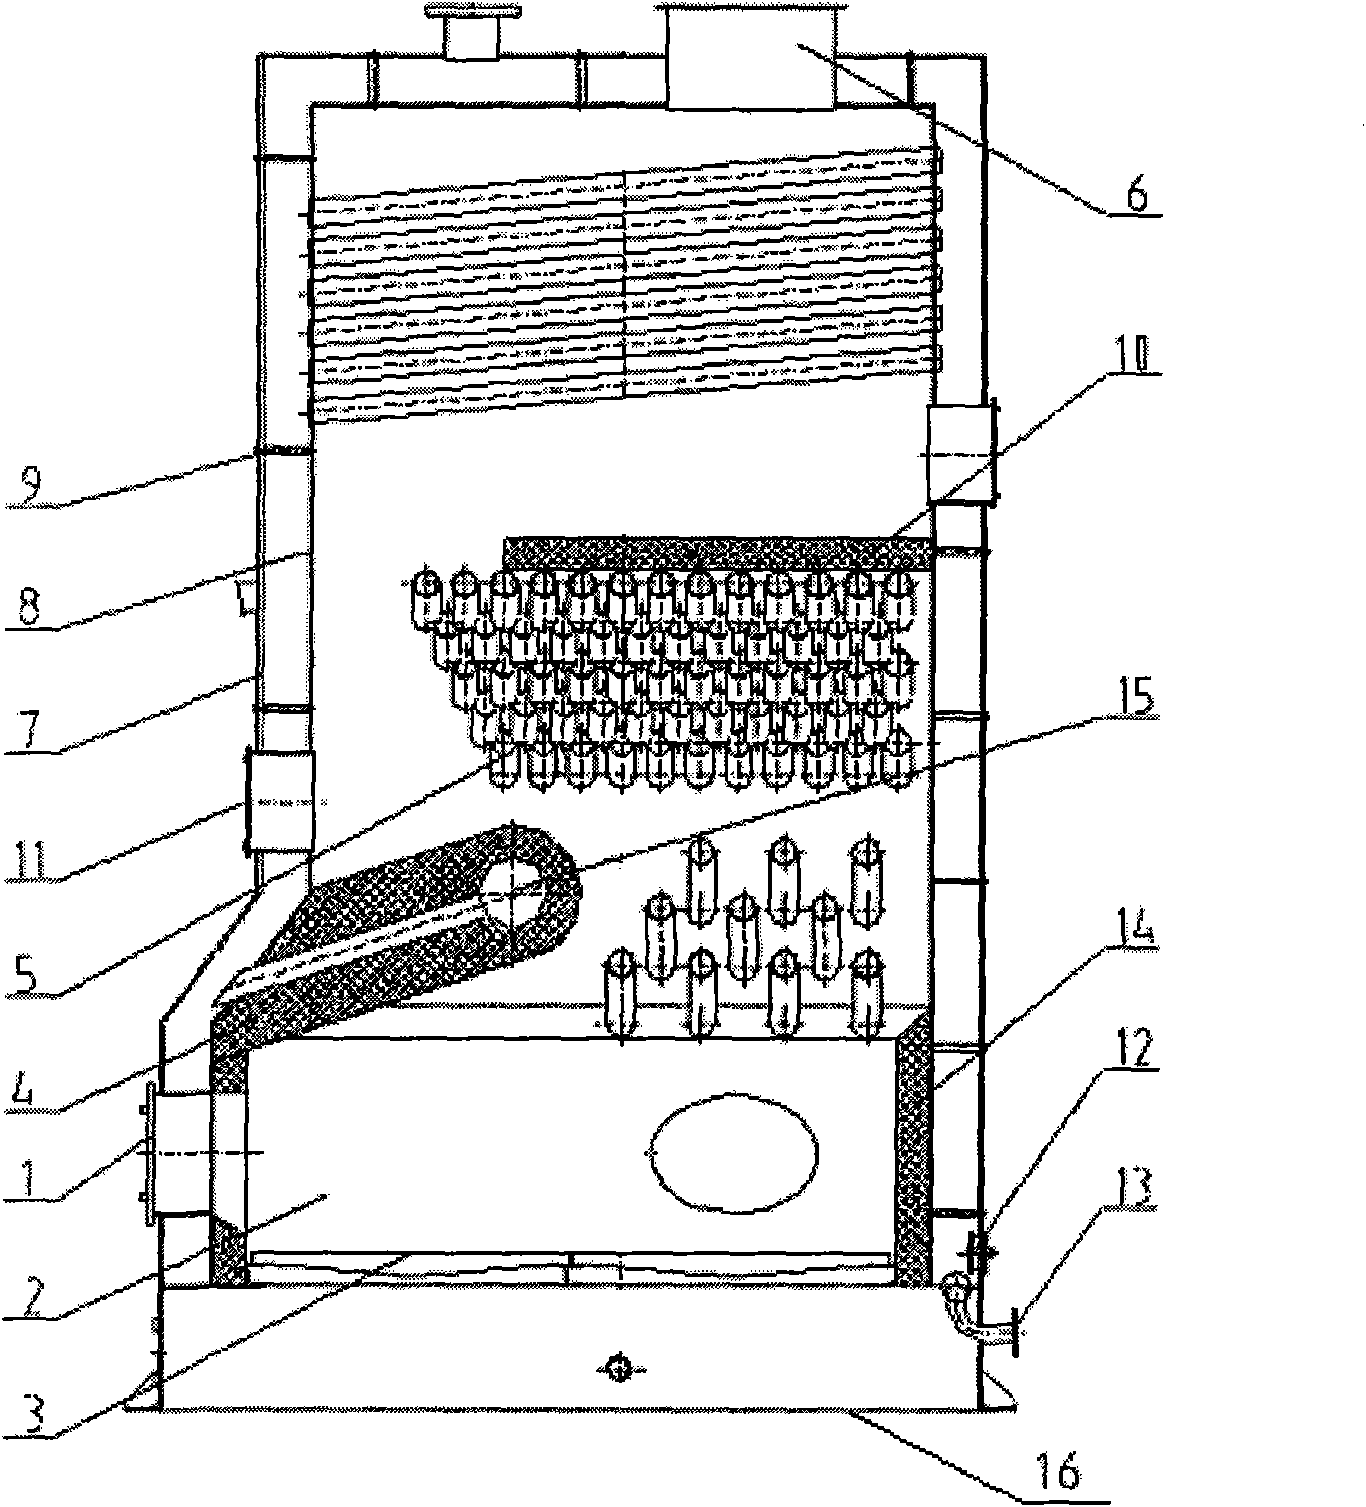 Novel anthracite heating stove